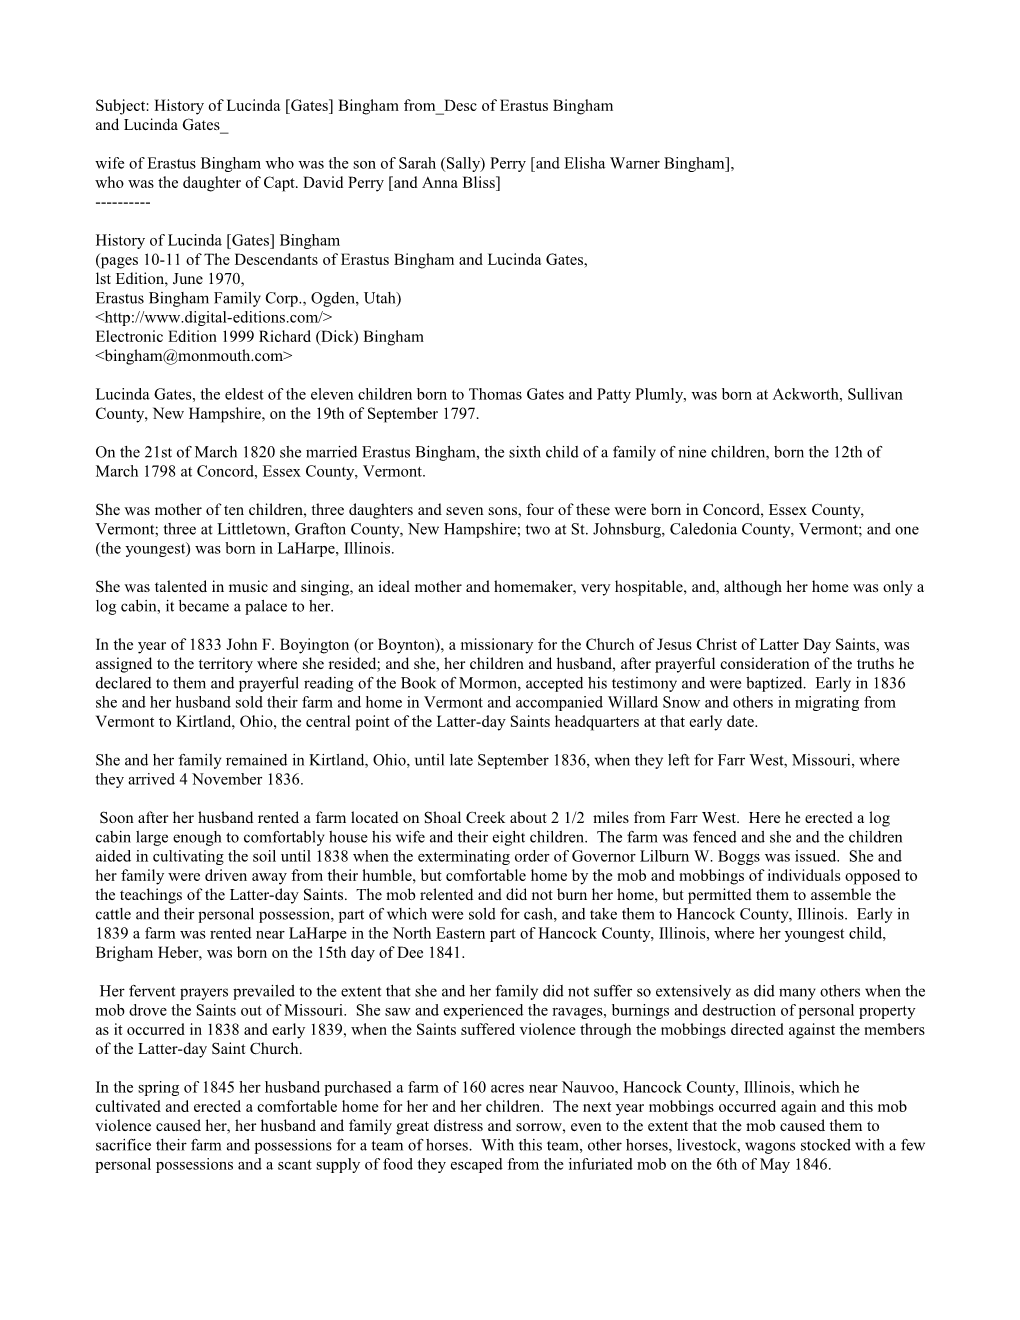 Subject: History of Lucinda Gates Bingham from Desc of Erastus Bingham